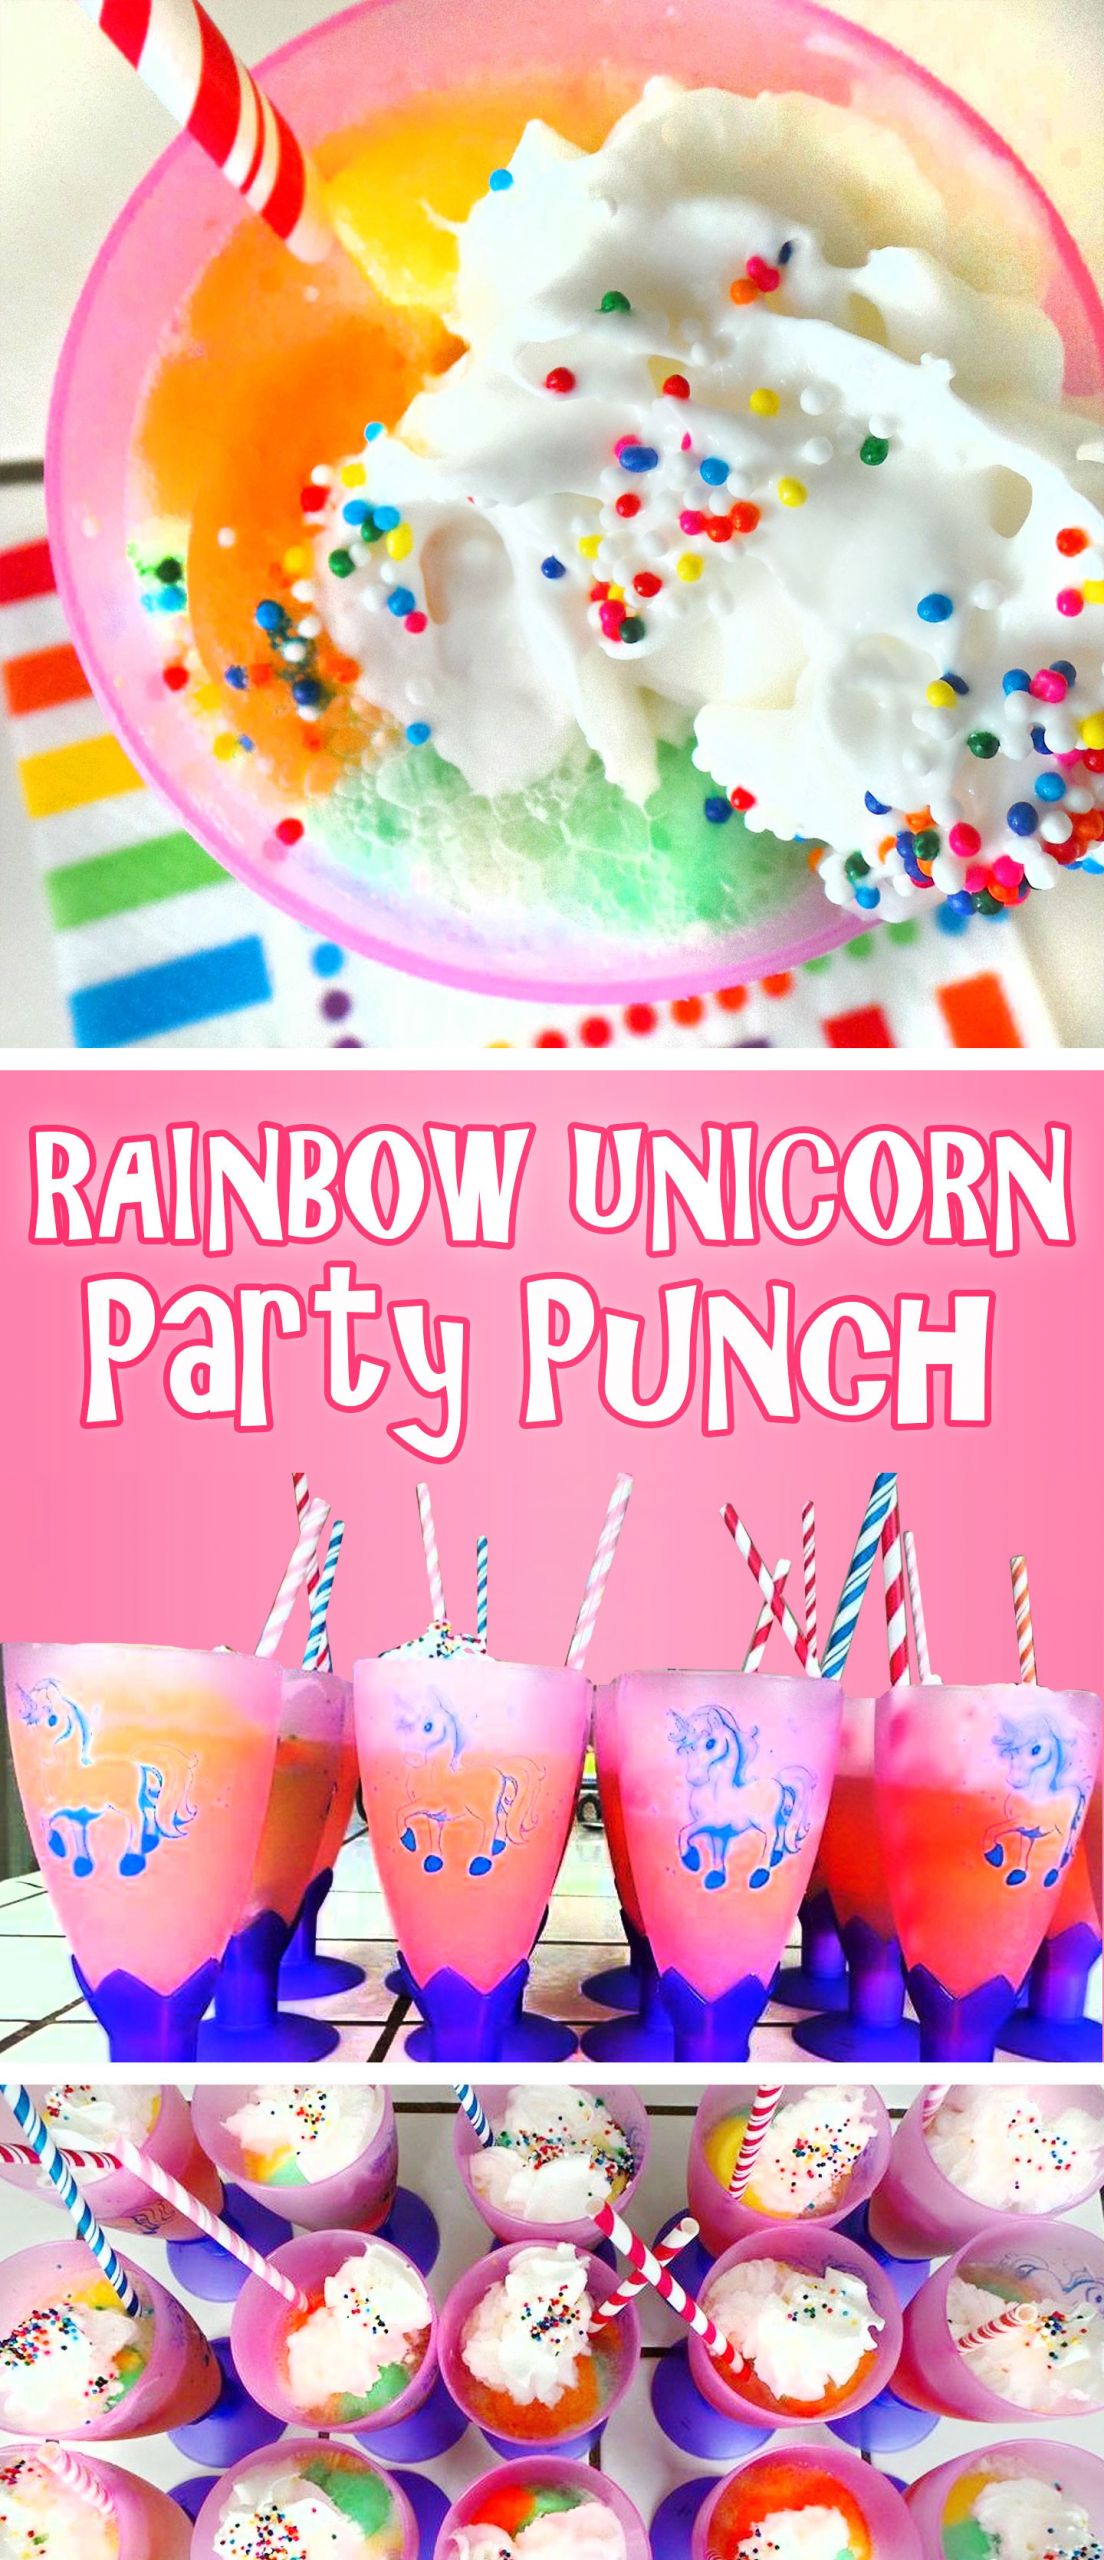 Rainbow Unicorn Party Ideas
 Rainbow Unicorn Party Punch